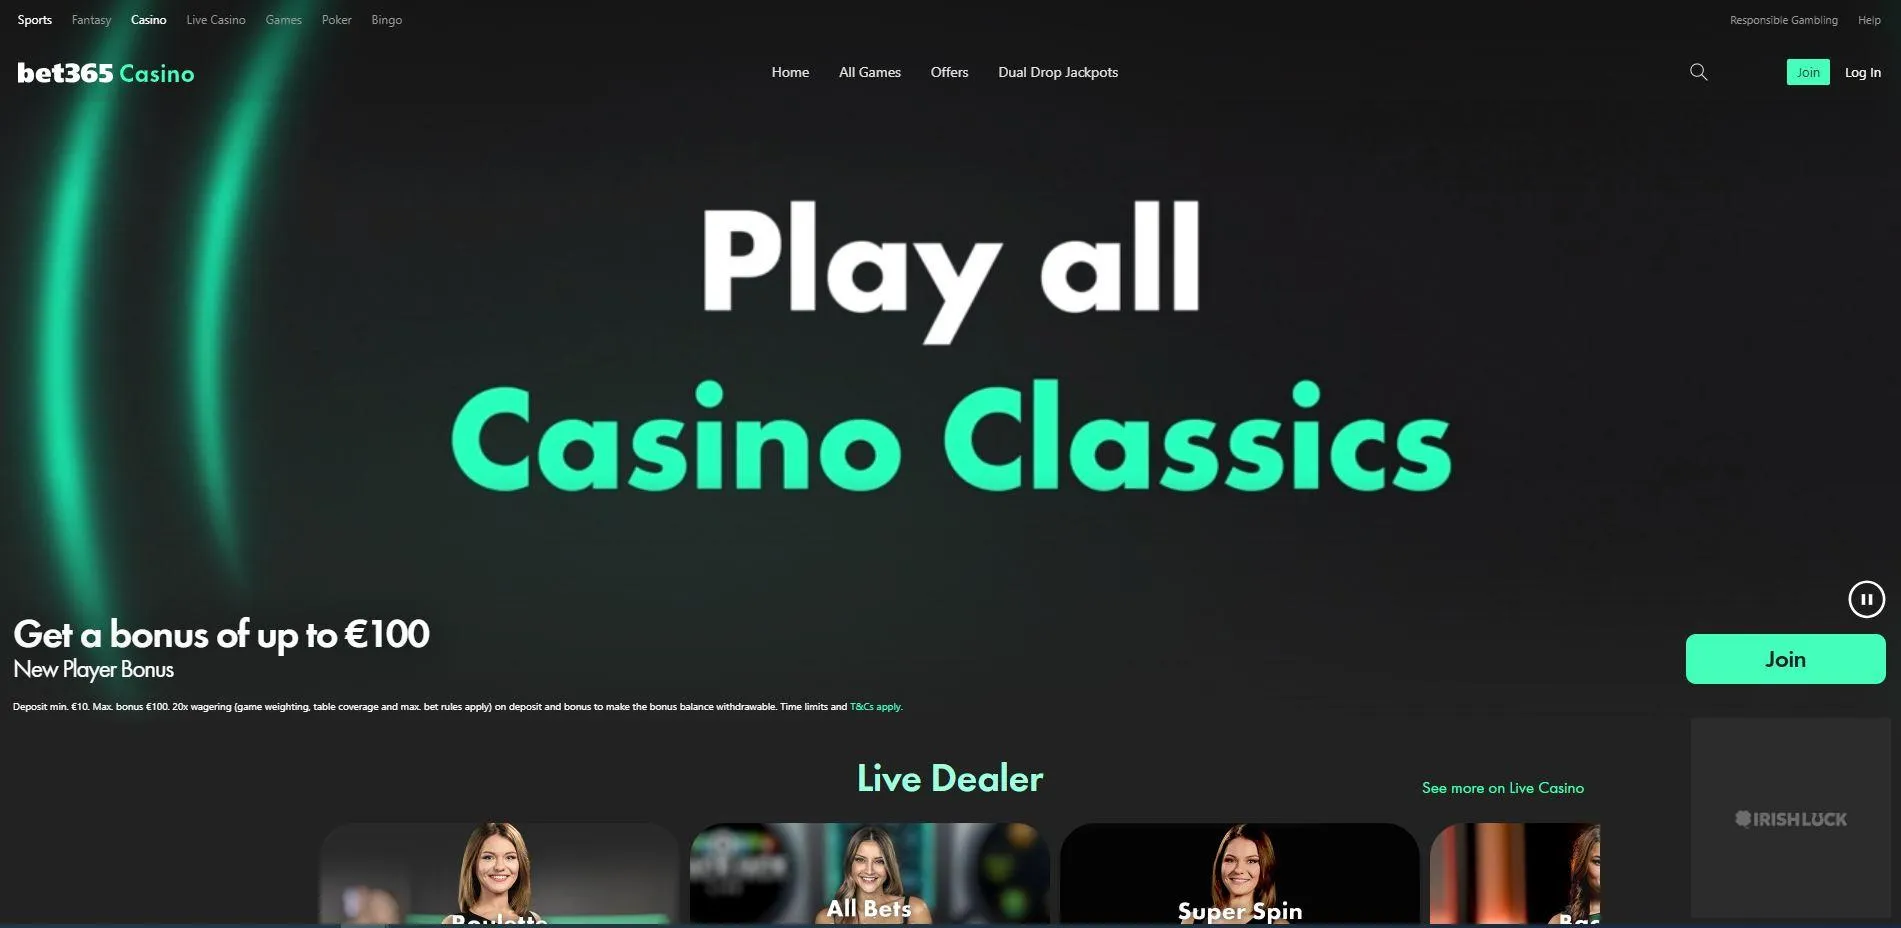 bet365 casino welcome bonus online casino